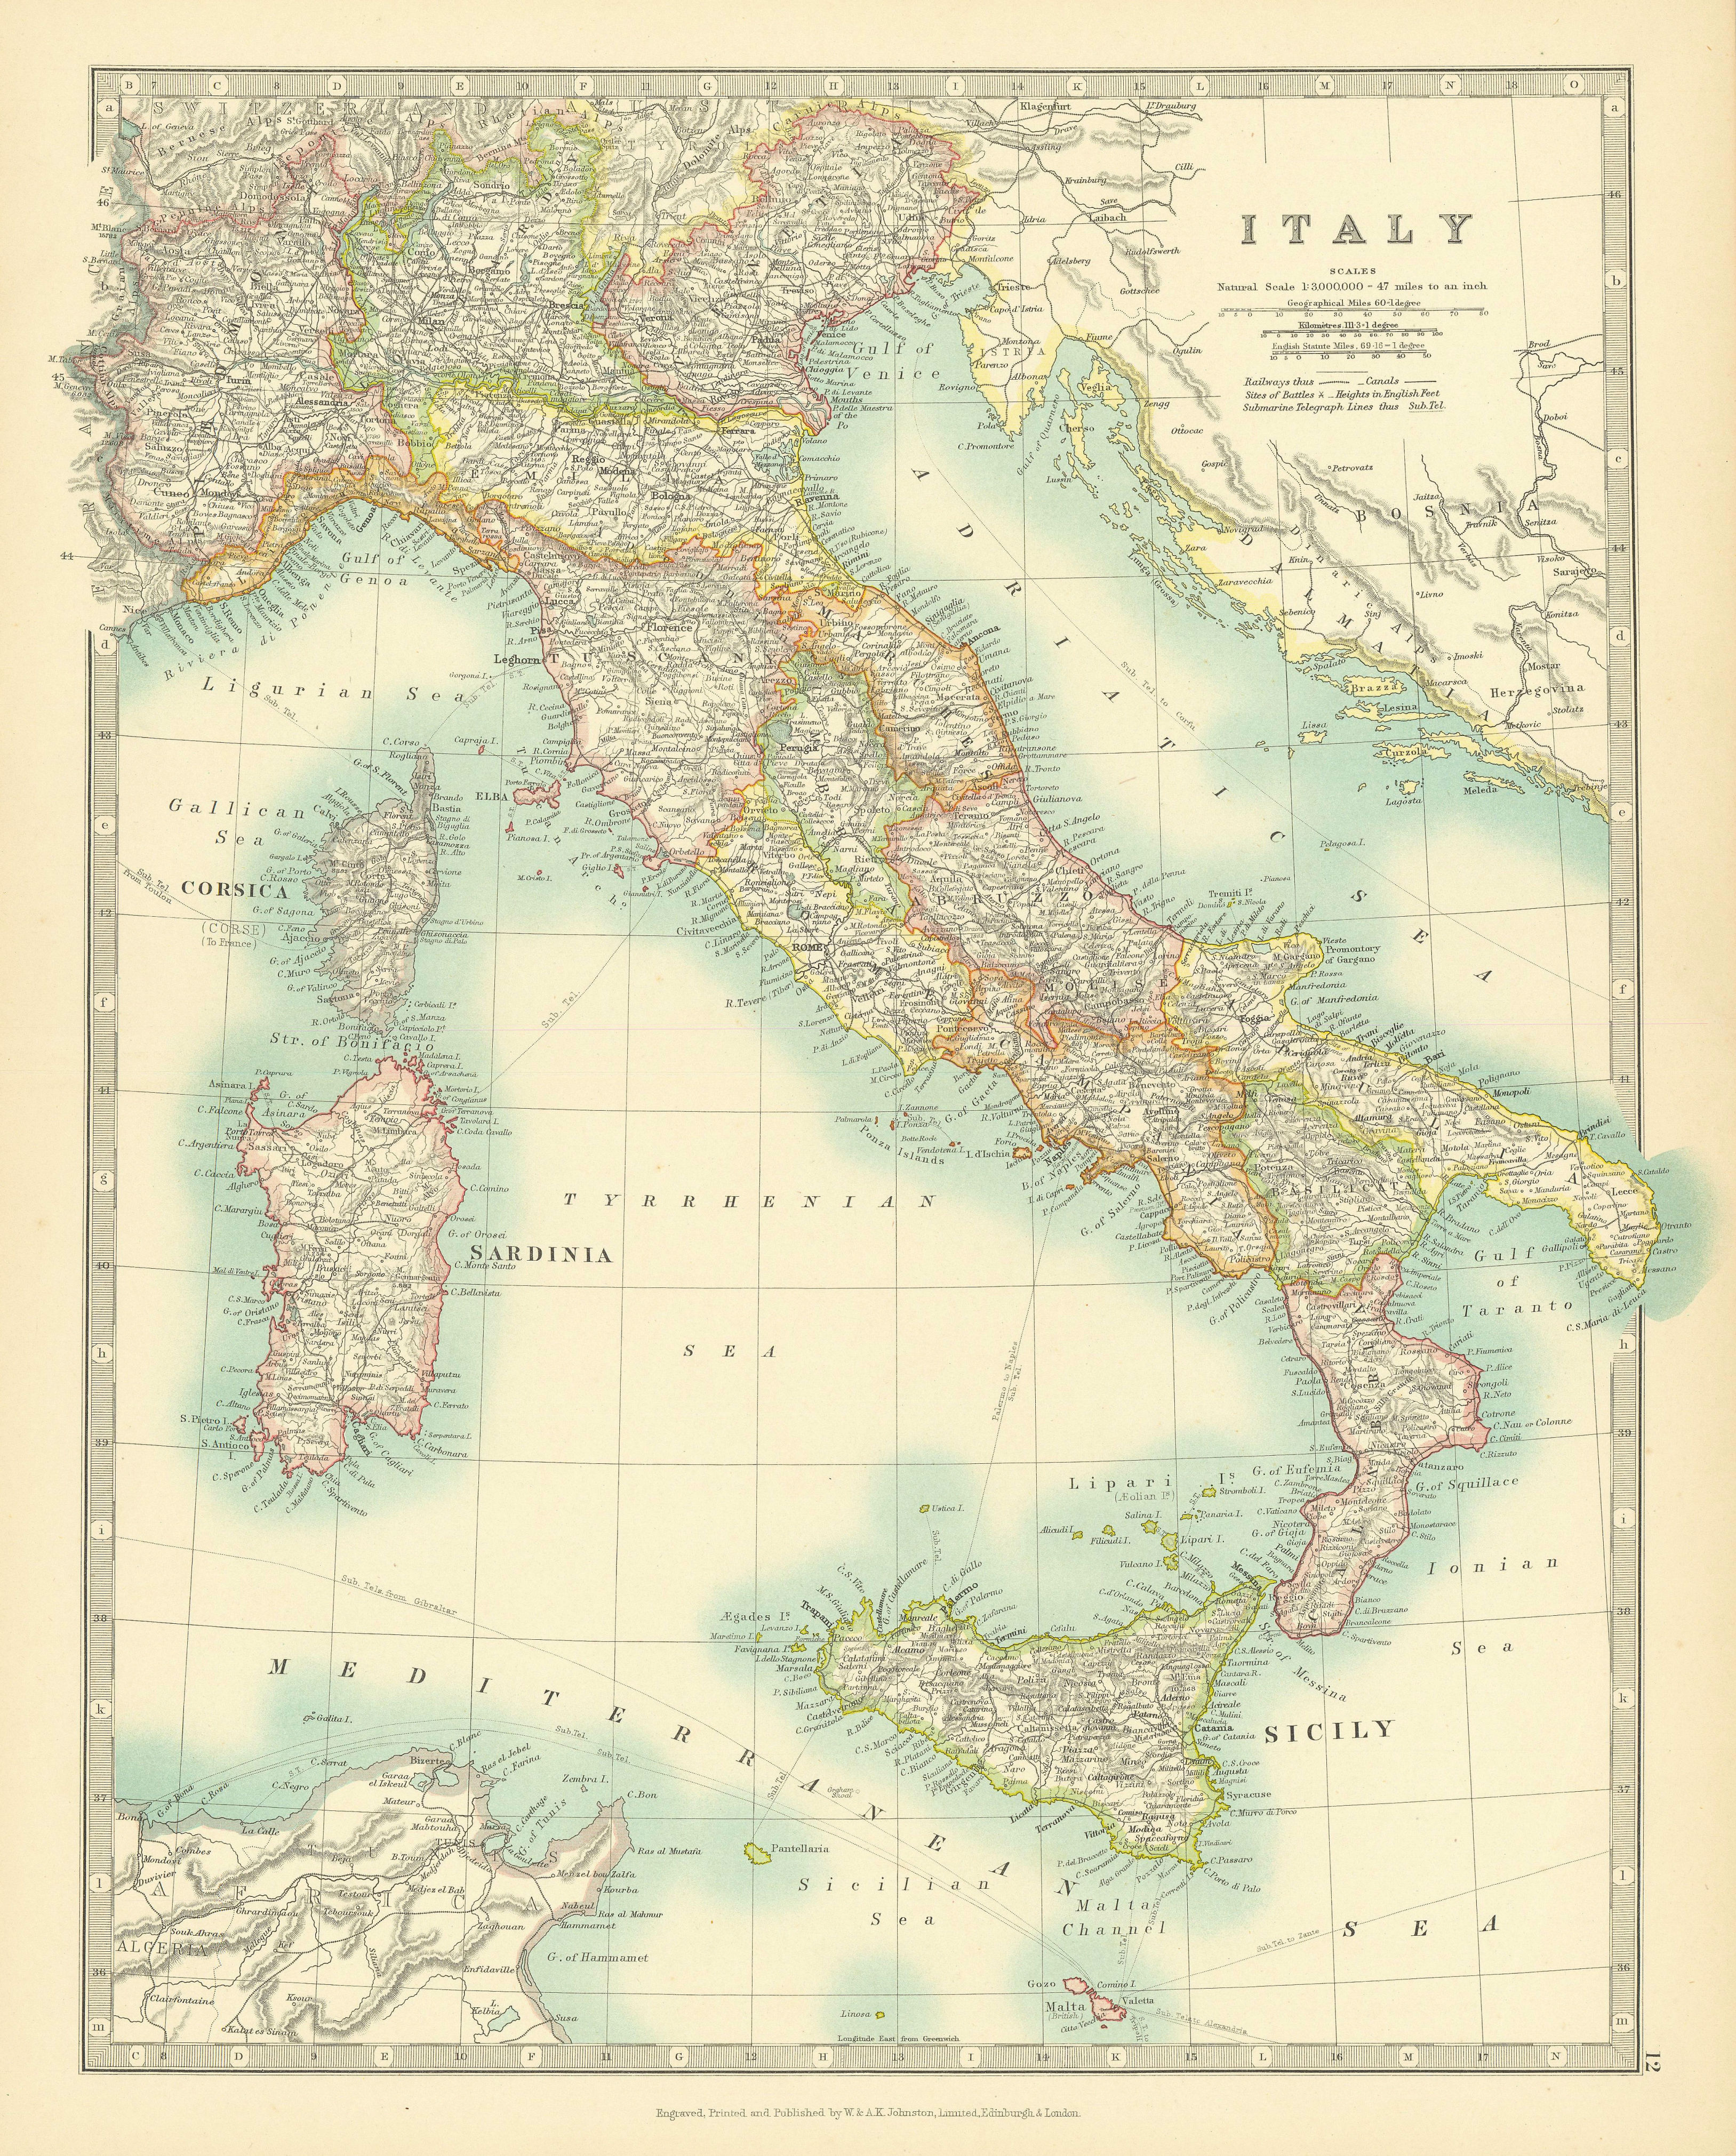 Associate Product ITALY. Railways. Key battlefields & dates. JOHNSTON 1911 old antique map chart